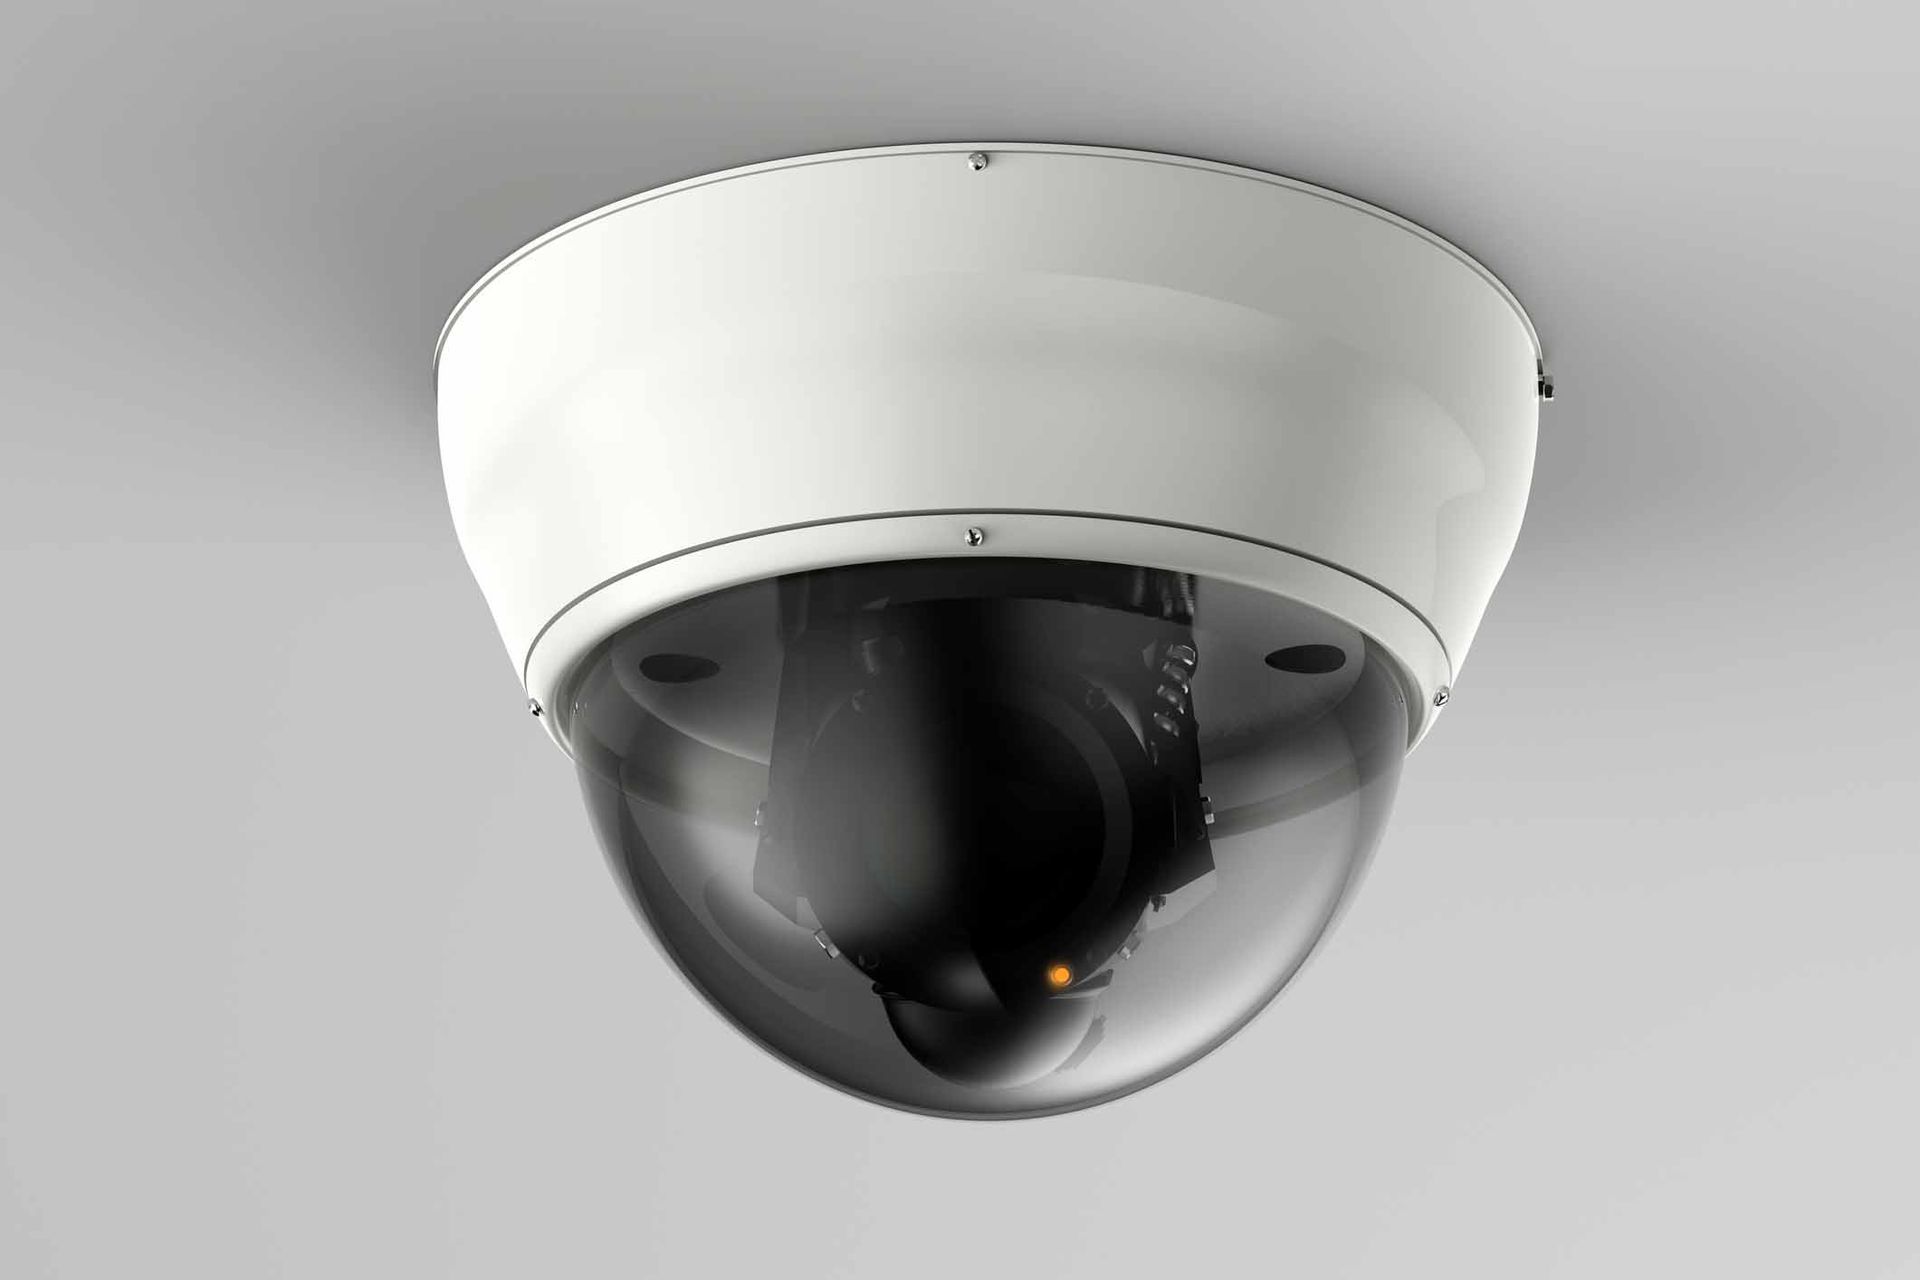 Security Camera On Ceiling — Hot Springs, AR — Armor Alarms